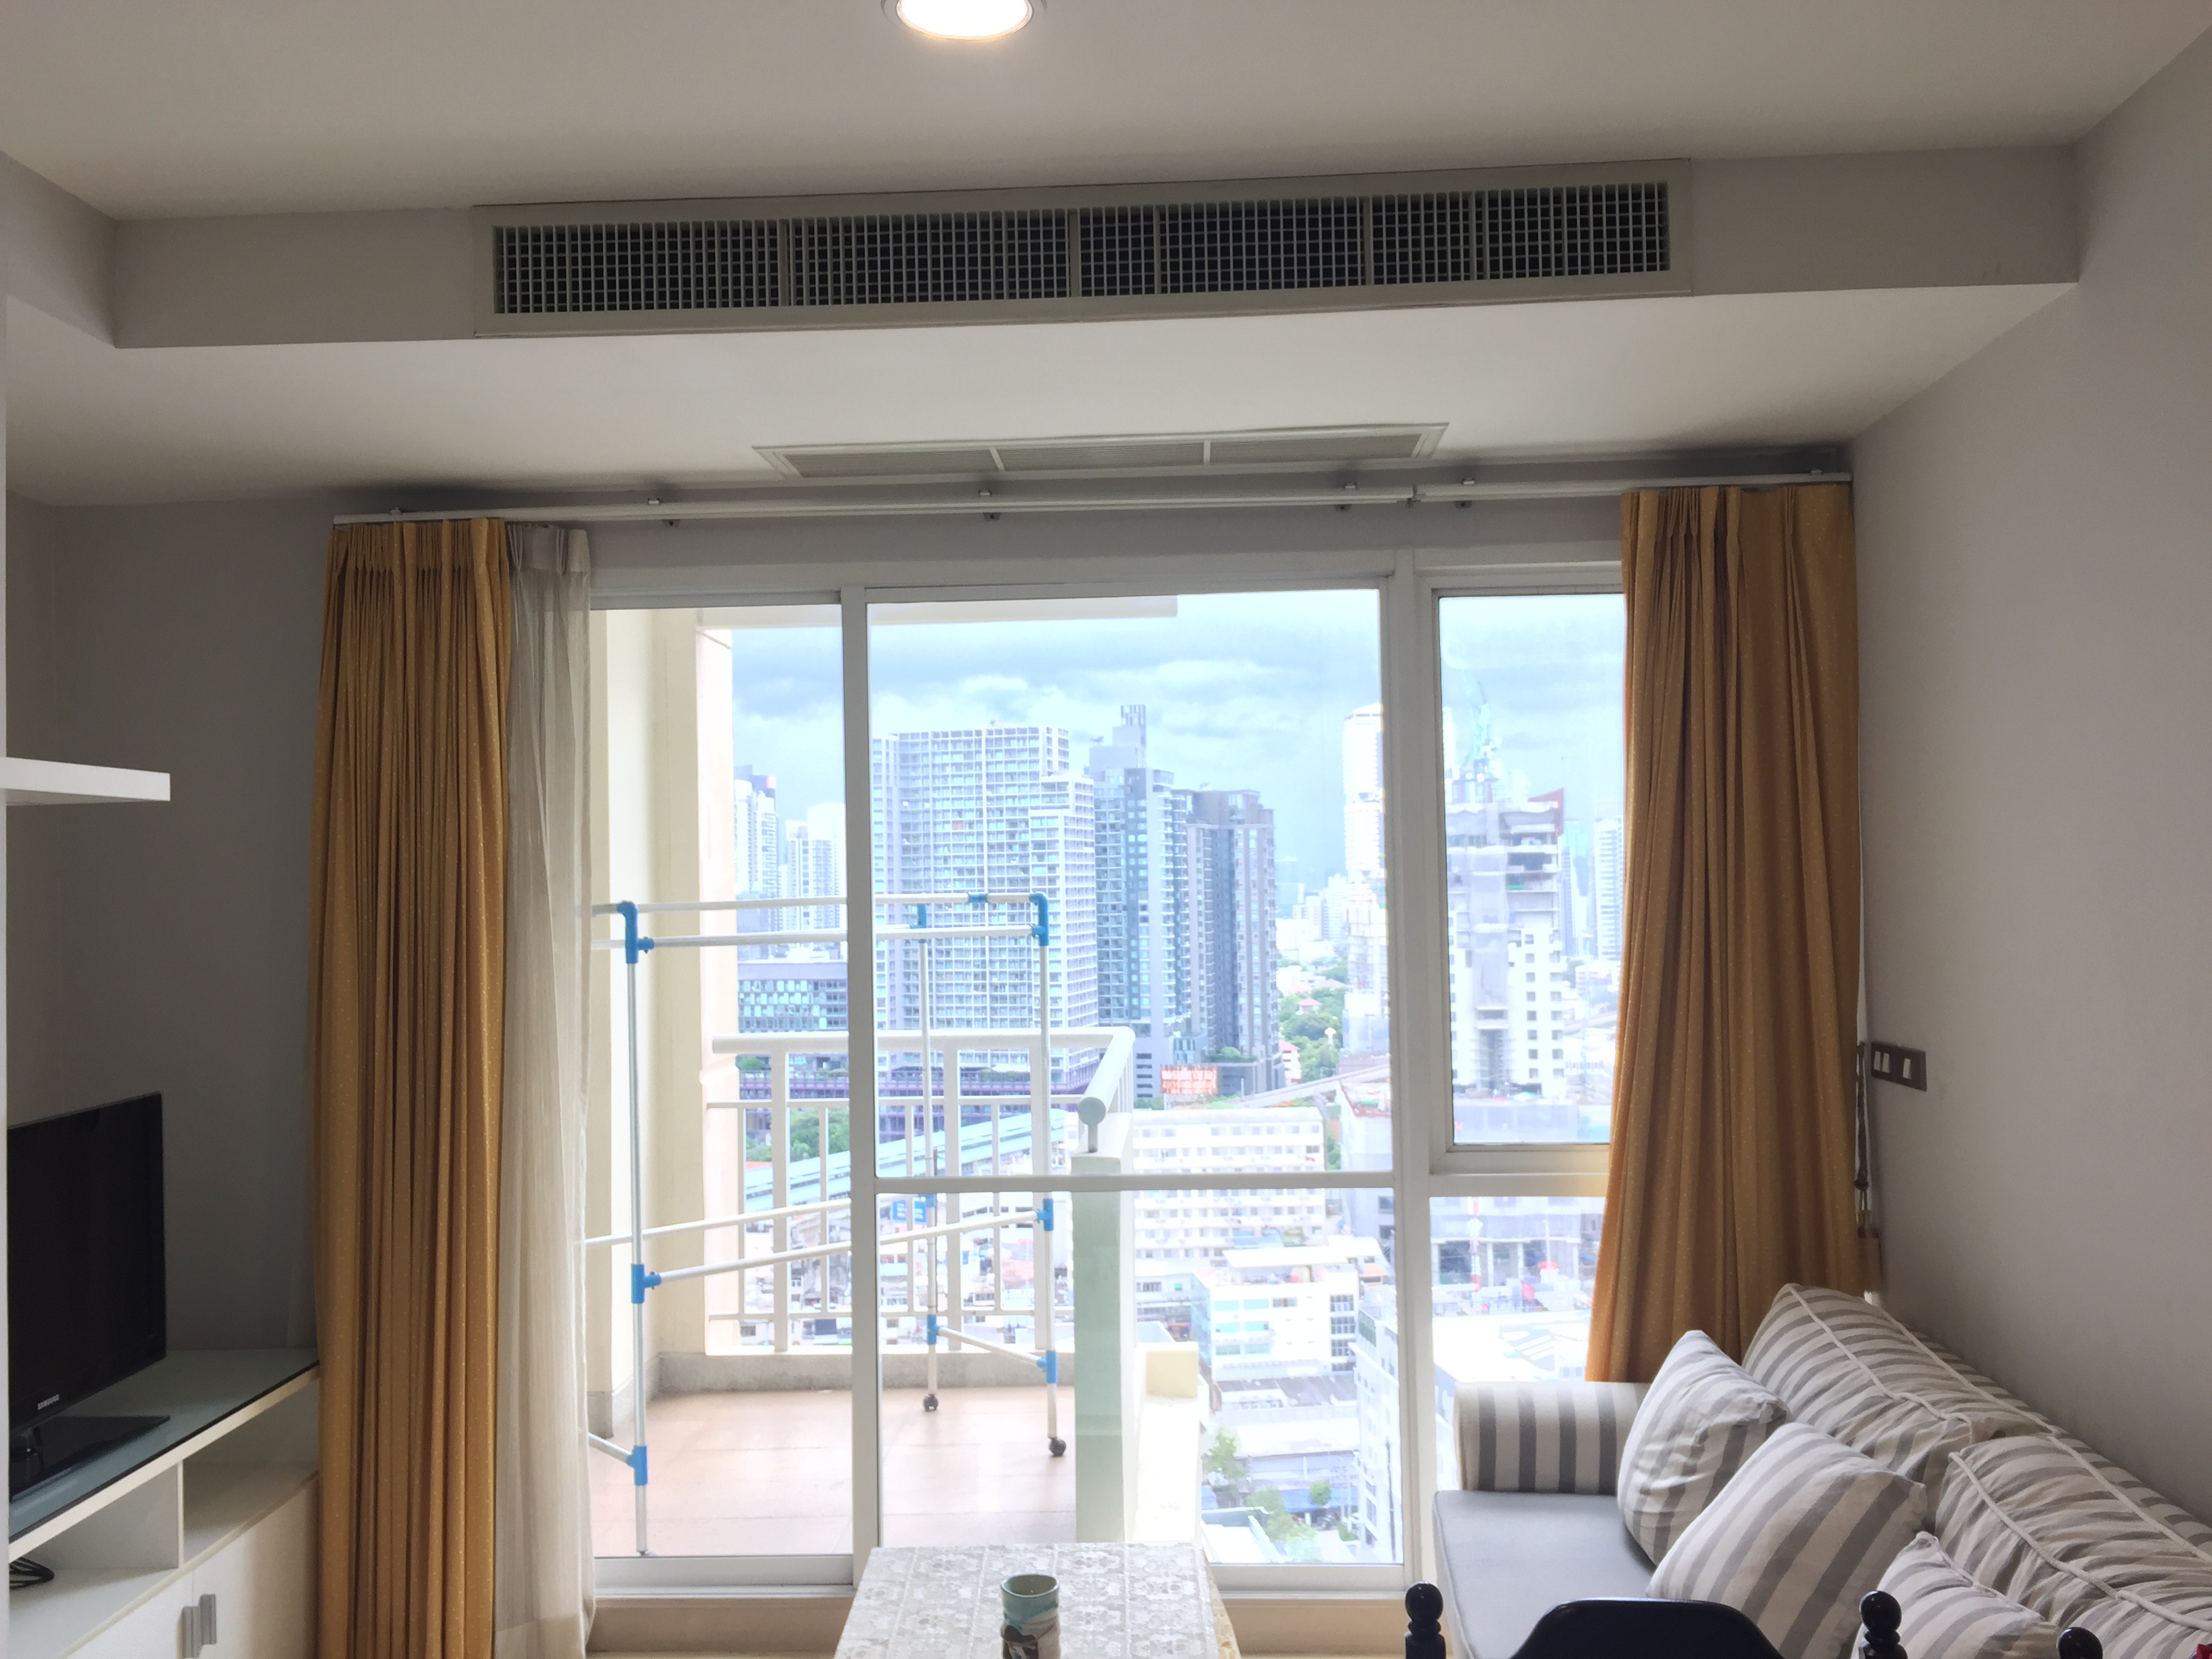 Sukhumvit 59 condo for rent, 2 beds 66.17 Sq.m. High Floor, Good view, Corner room,  walk to Thong lor BTS.